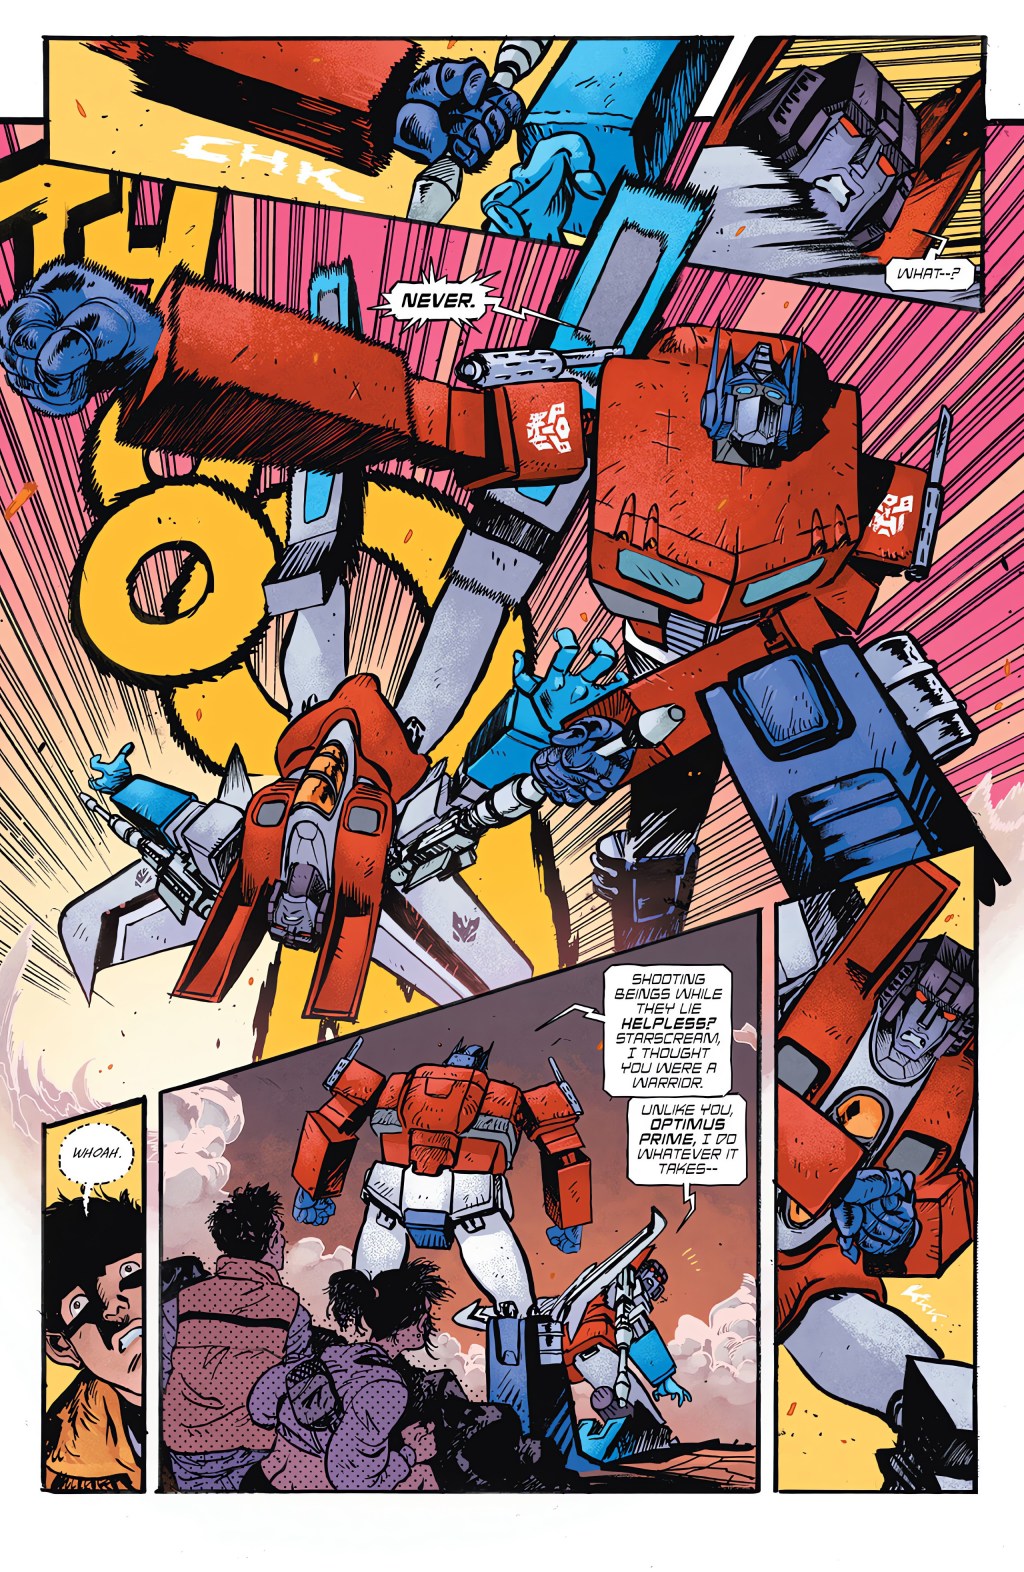 Transformers Issue #1 (2023), Skybound Entertainment. Words by Daniel Warren Johnson. Art by Daniel Warren Johnson and Mike Spicer.